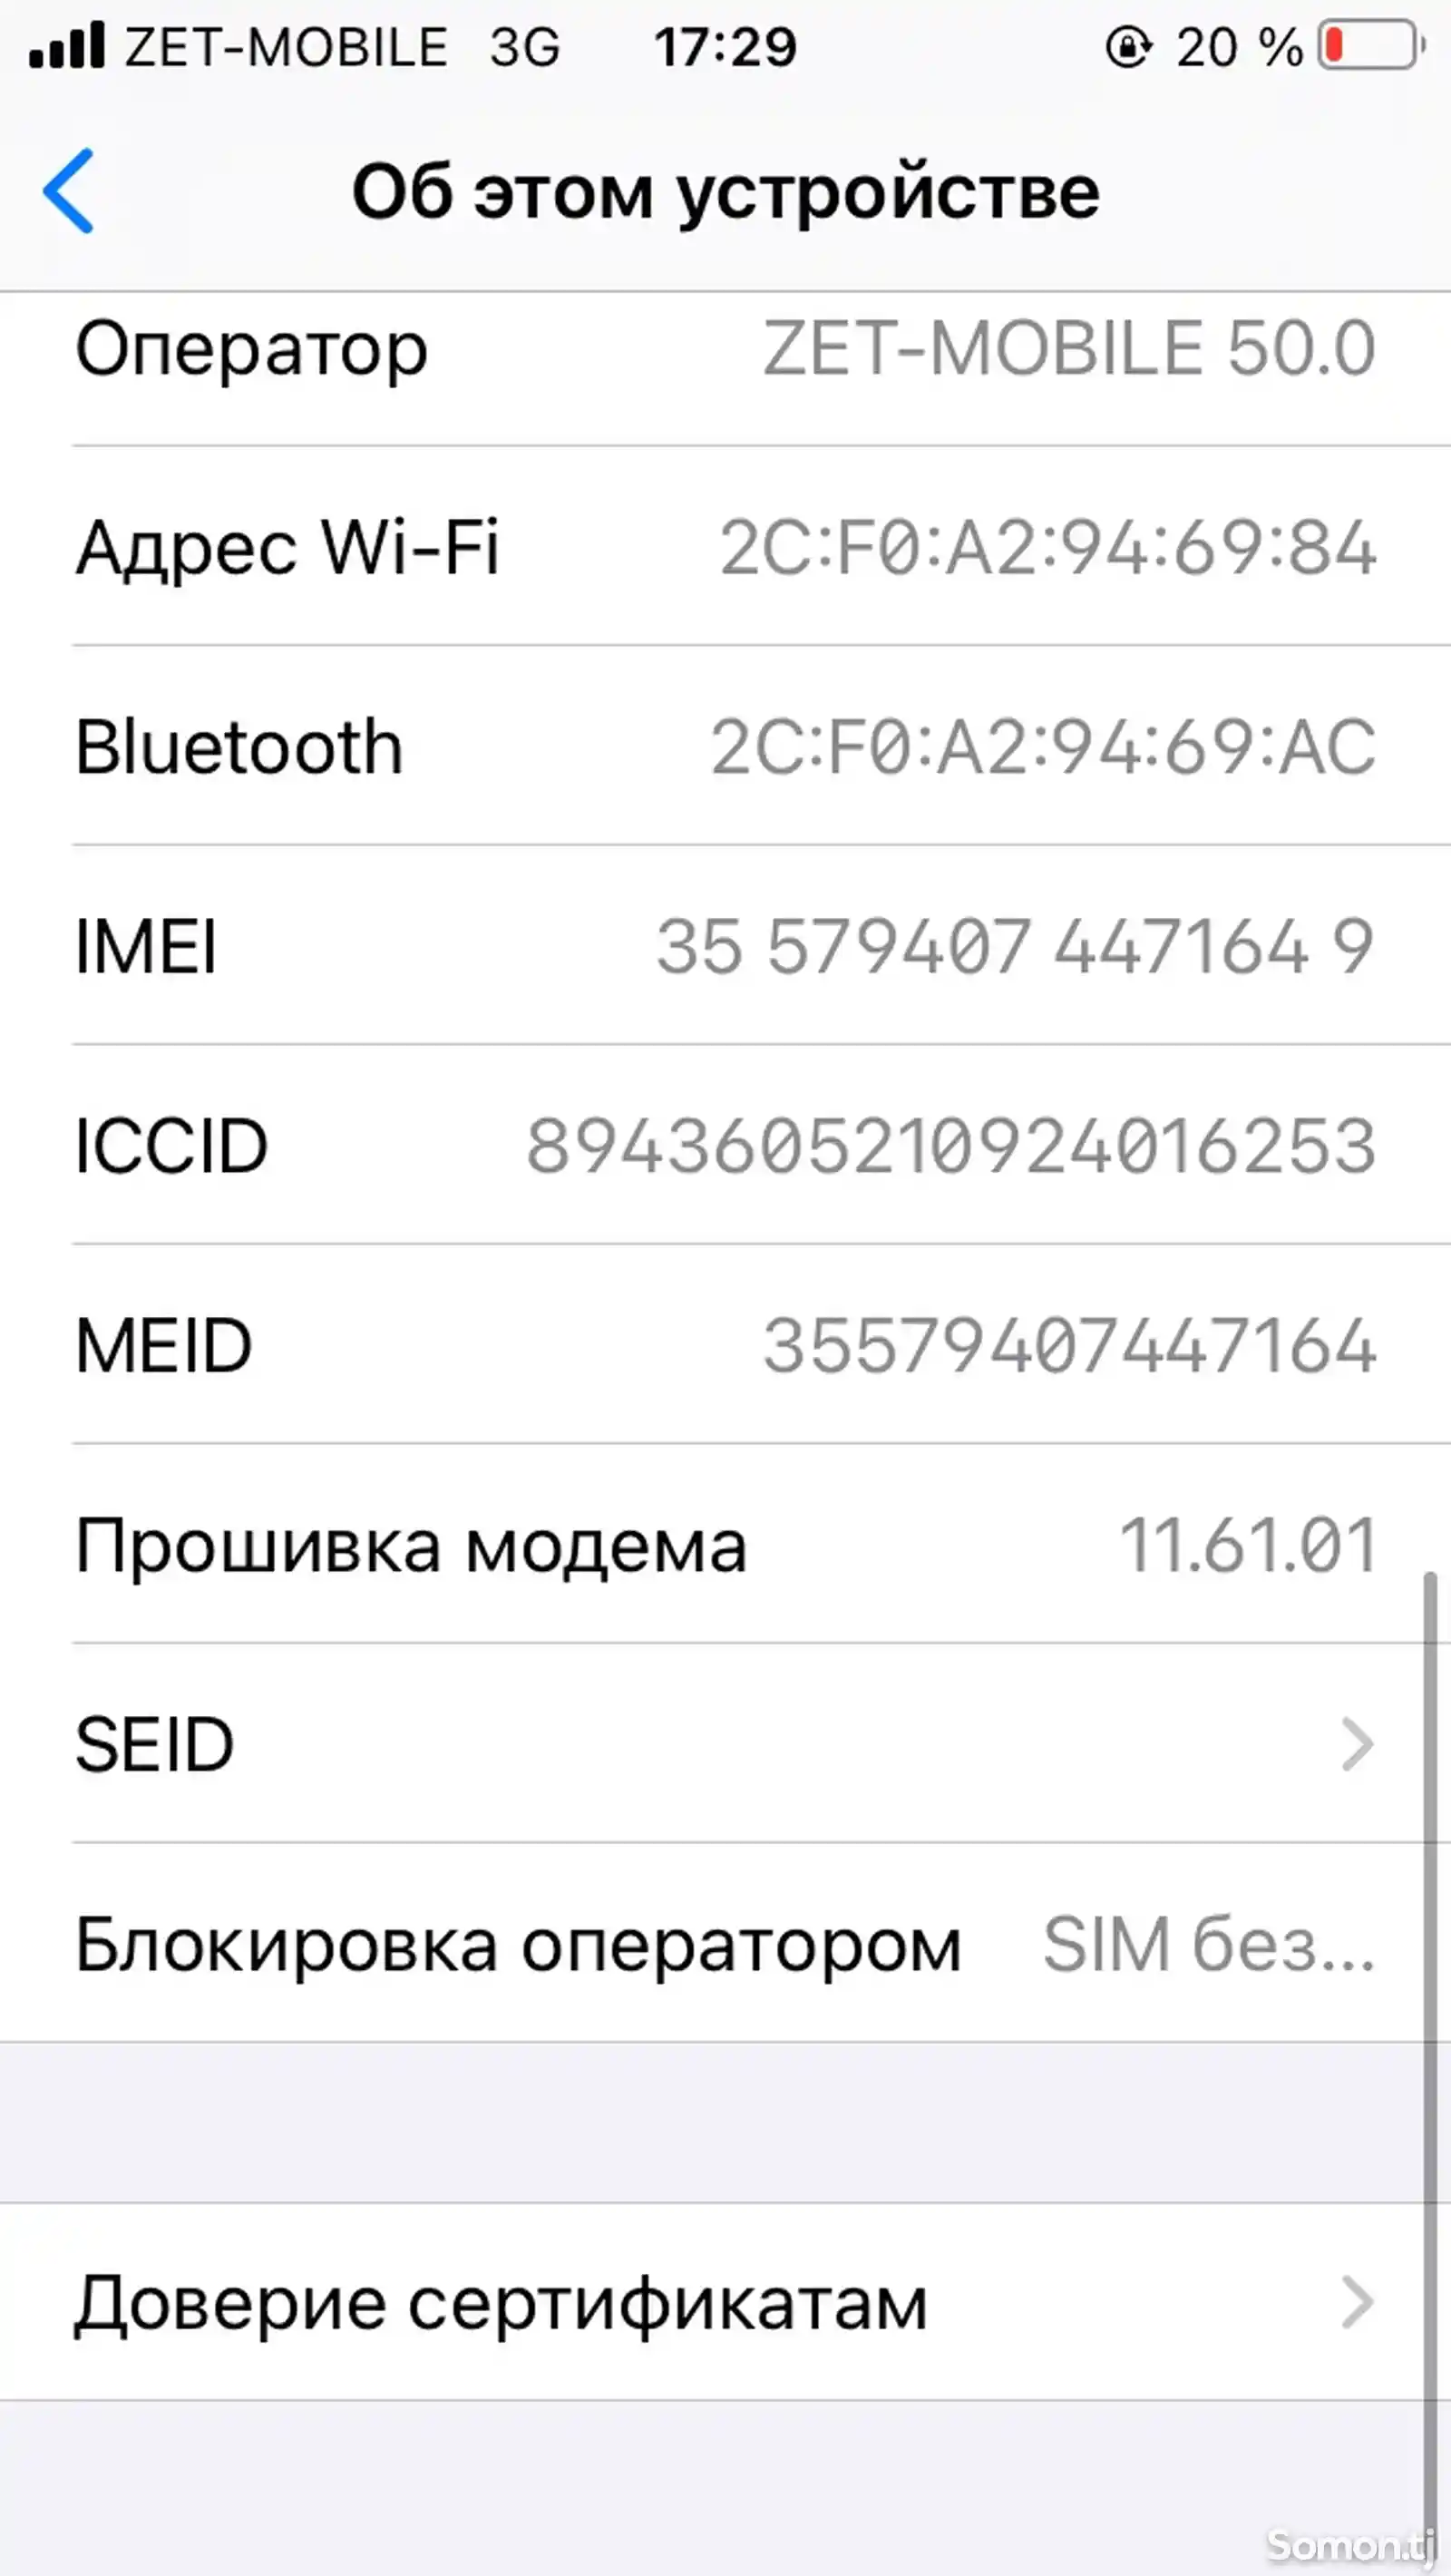 Apple iPhone SE, 64 gb-2